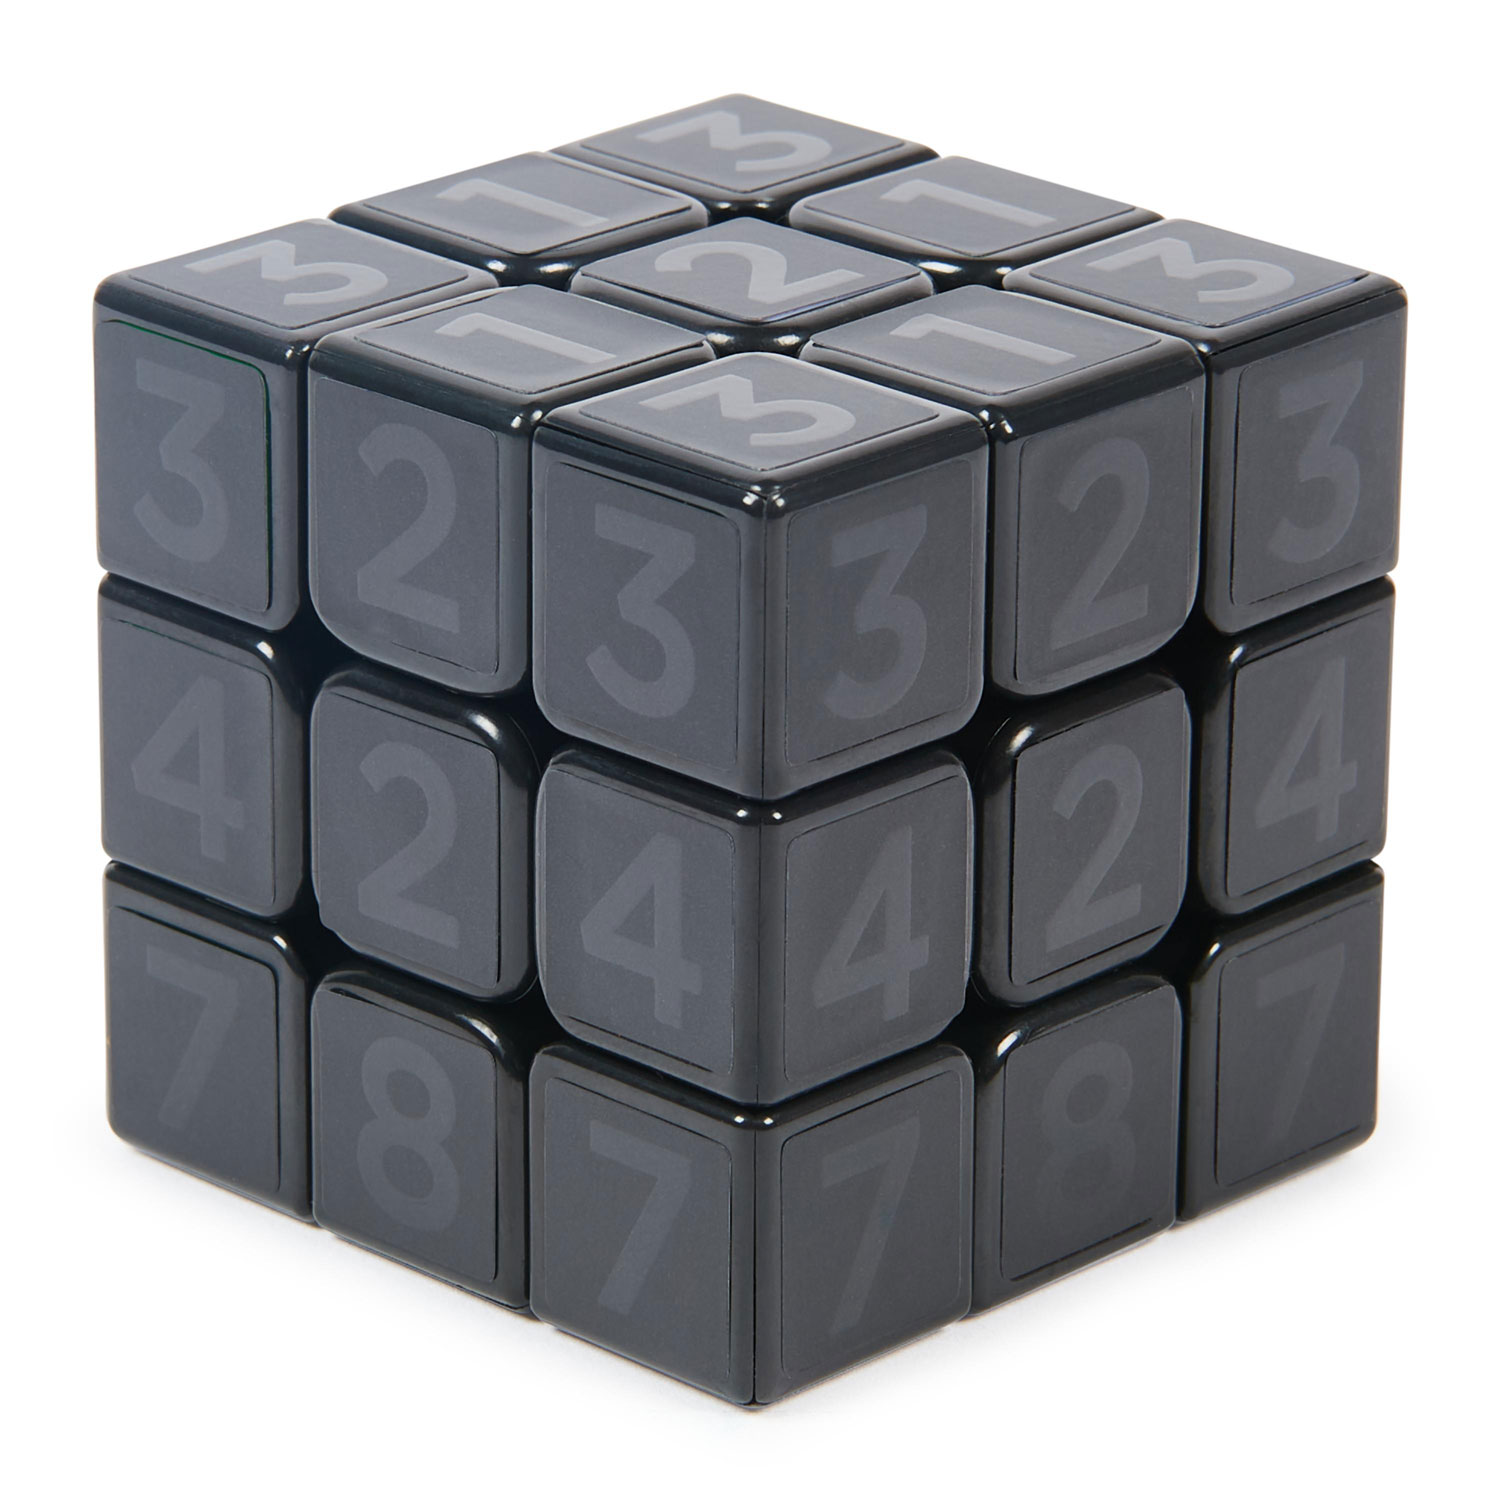 Rubik's Cube - Coach